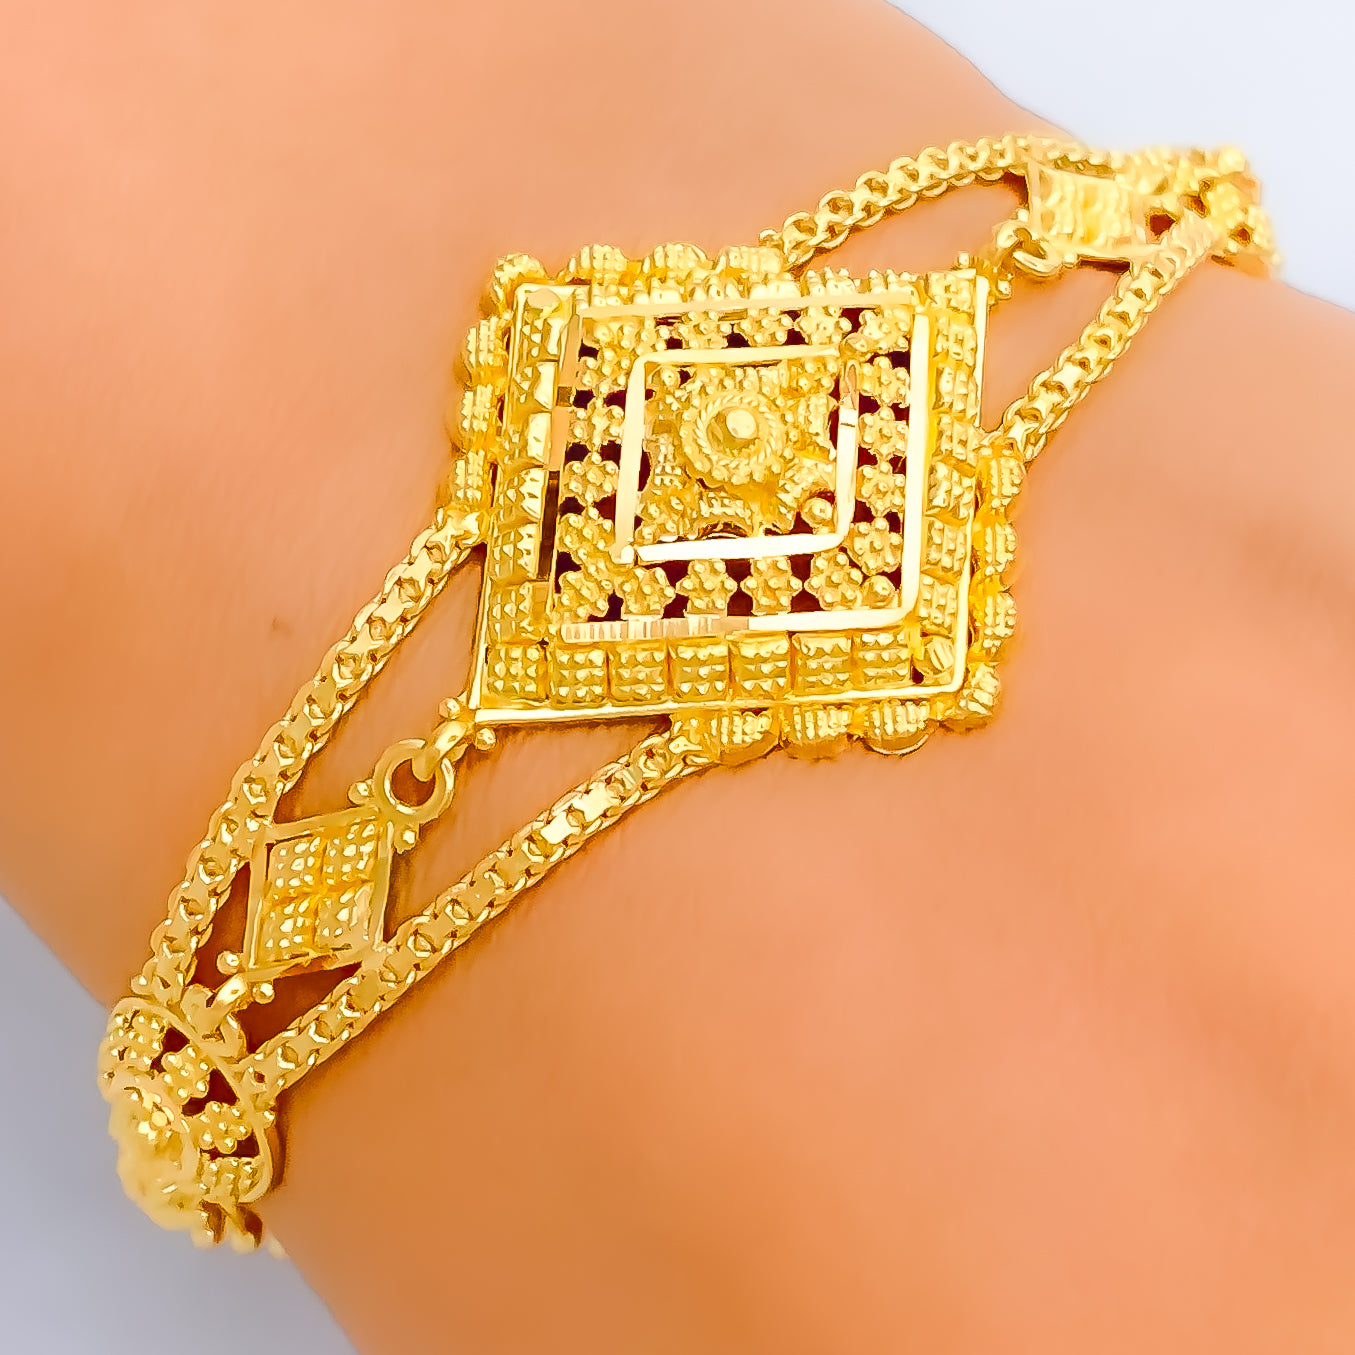 Wholesaler of 18kt rose gold delicate bracelet design for women rhj-1209 |  Jewelxy - 150413